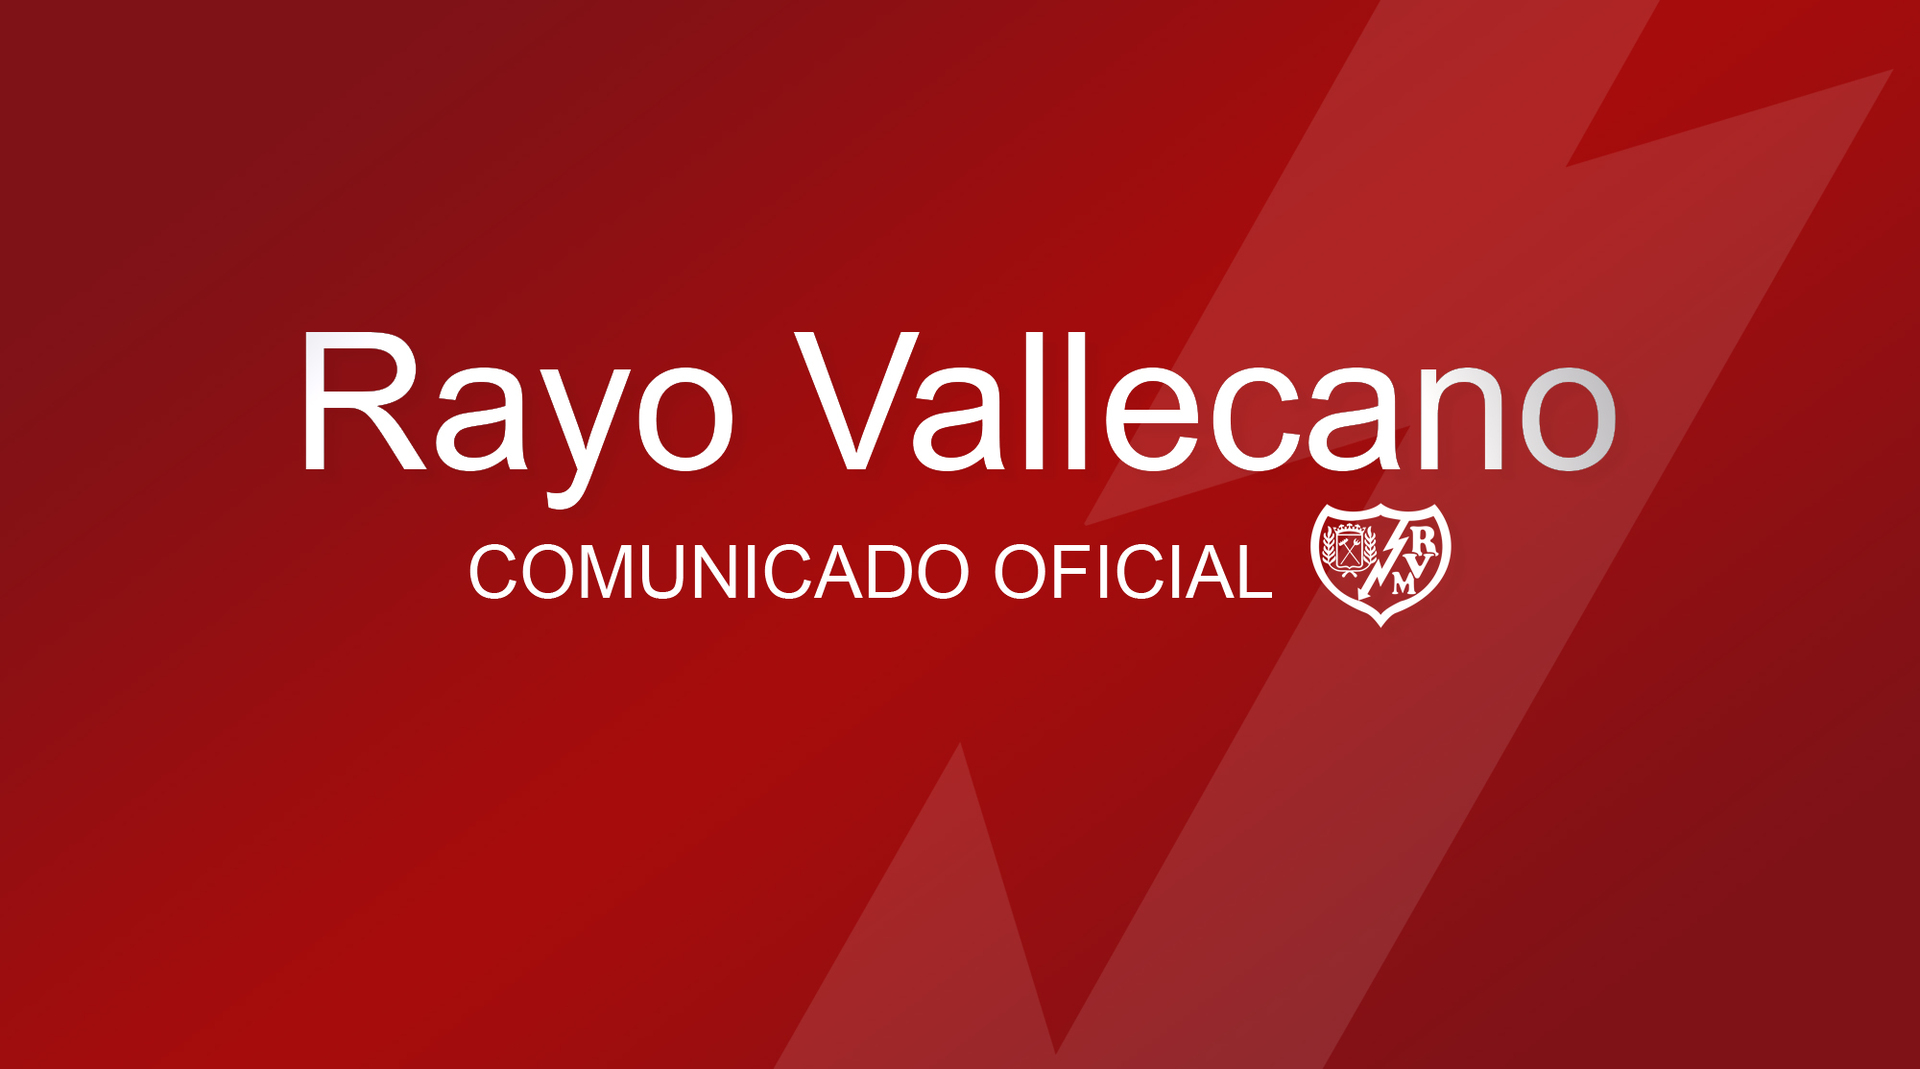 Rayo Vallecano on X: COMUNICADO OFICIAL / Rayo Vallecano de